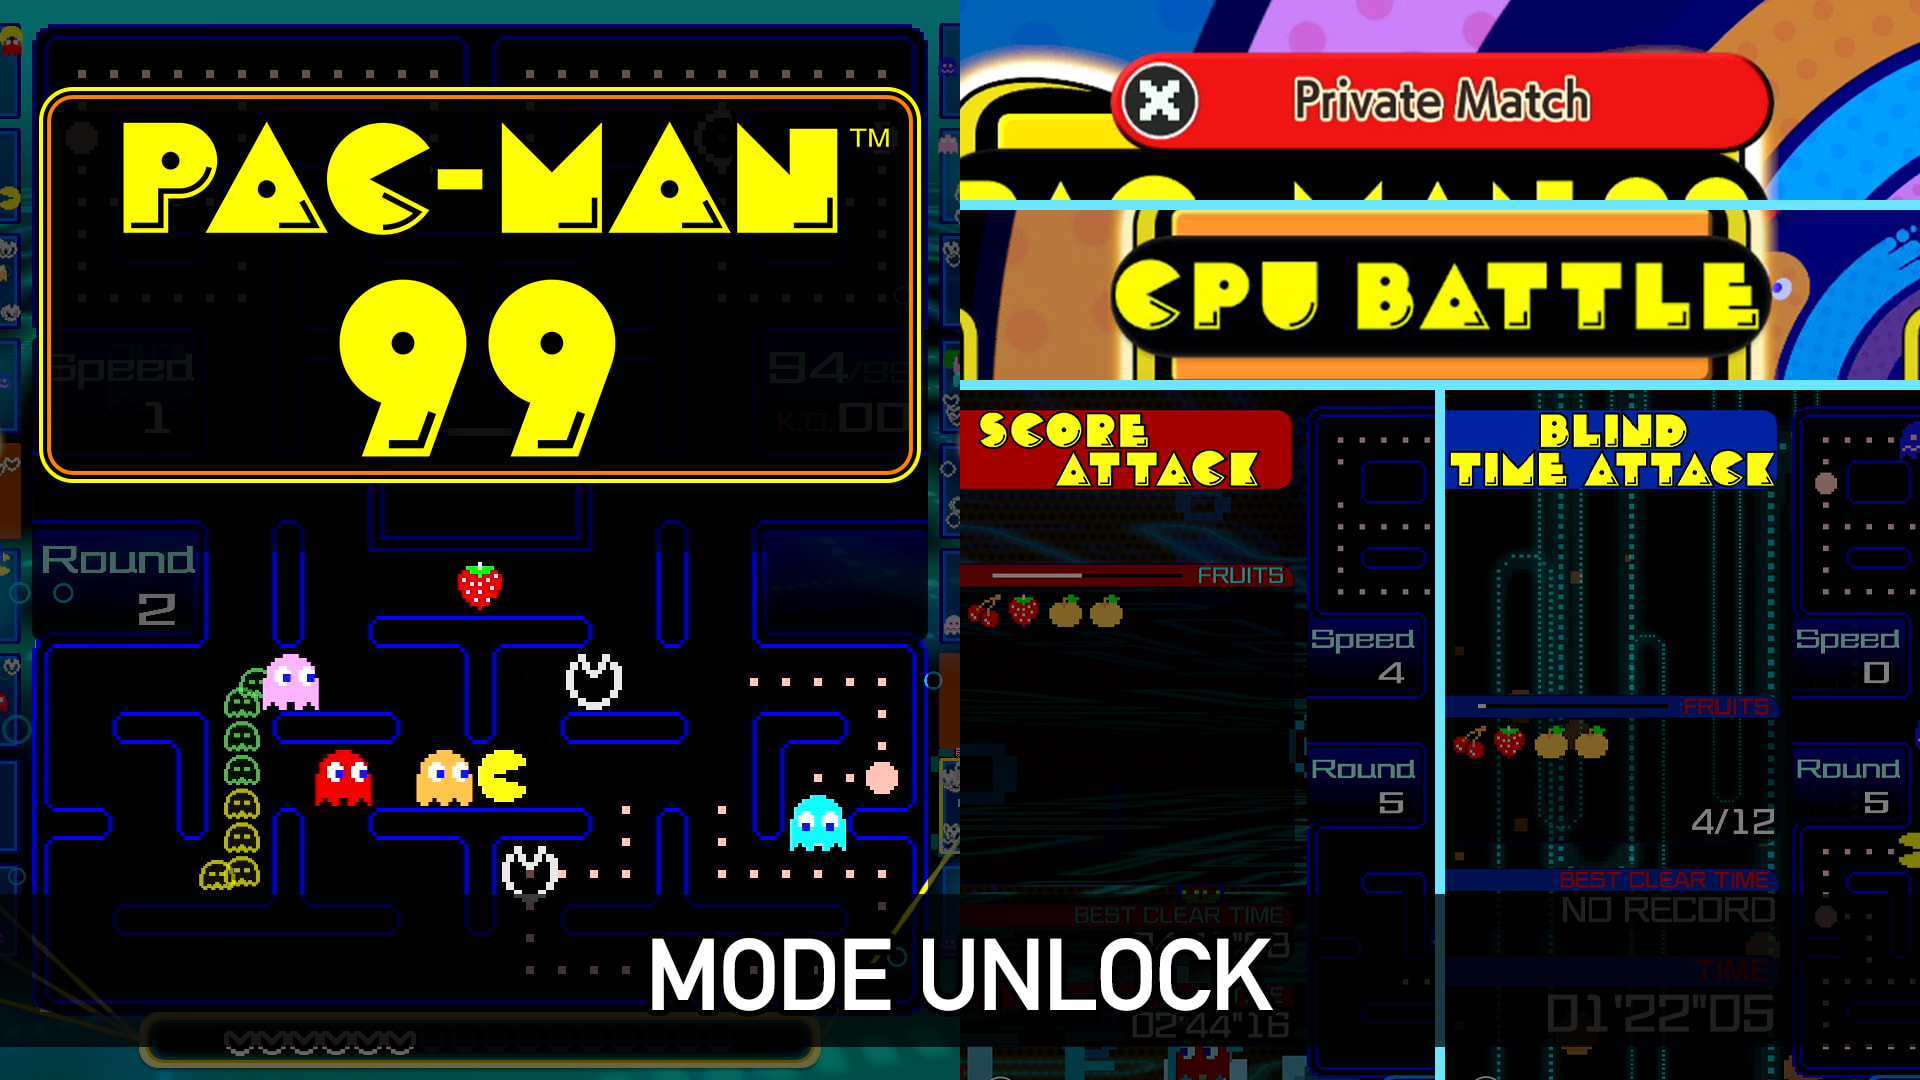 PAC-MAN™ 99 Mode Unlock